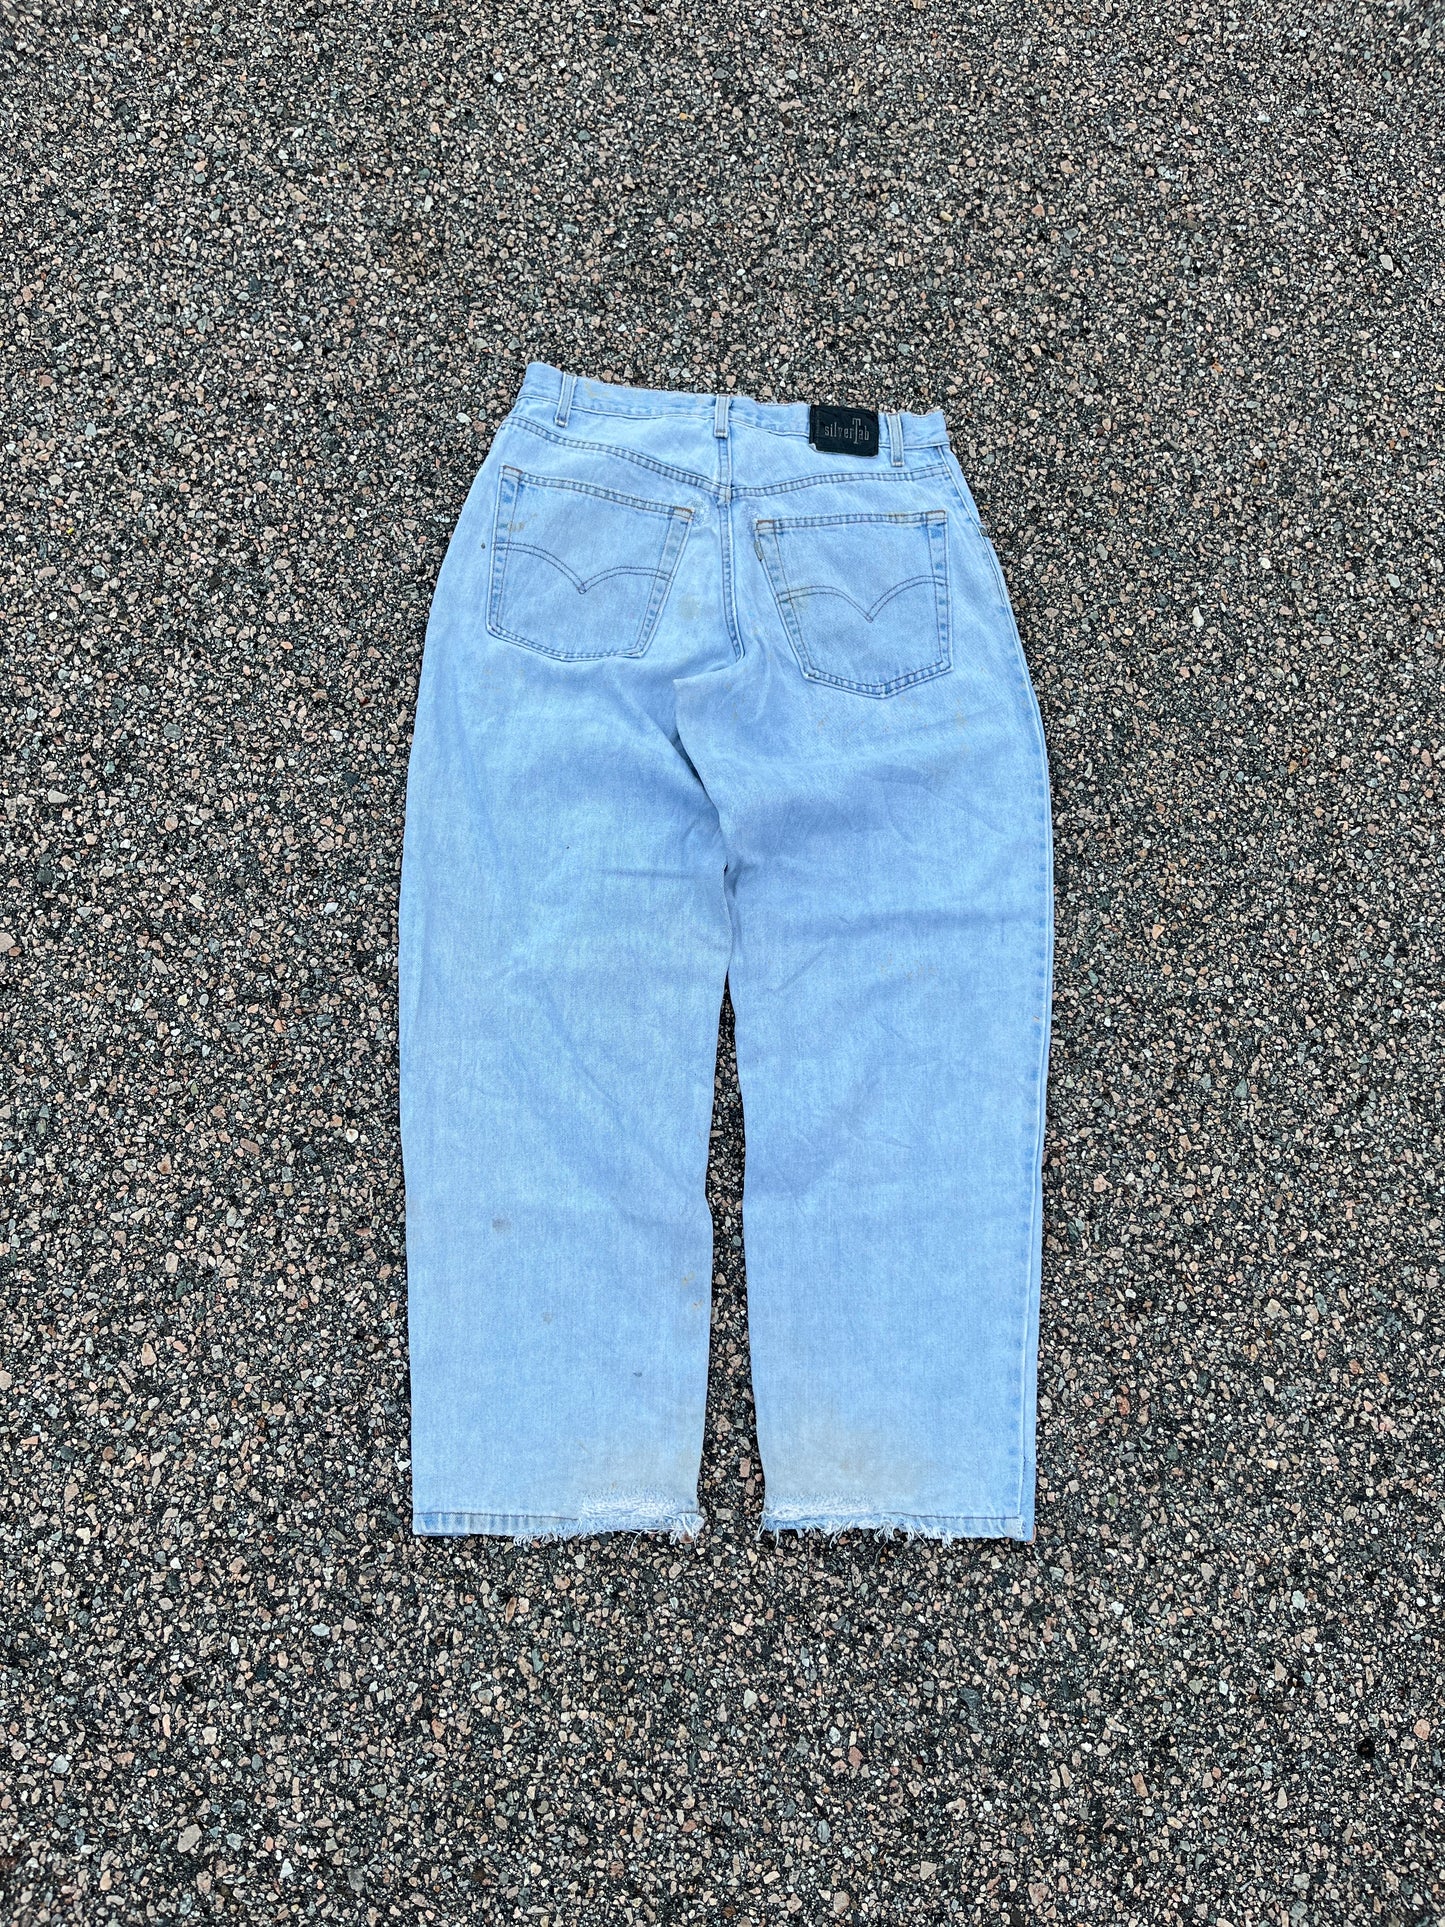 Levi’s 570 Silvertab Faded Denim Baggy Fit Pants - 33 x 31.5